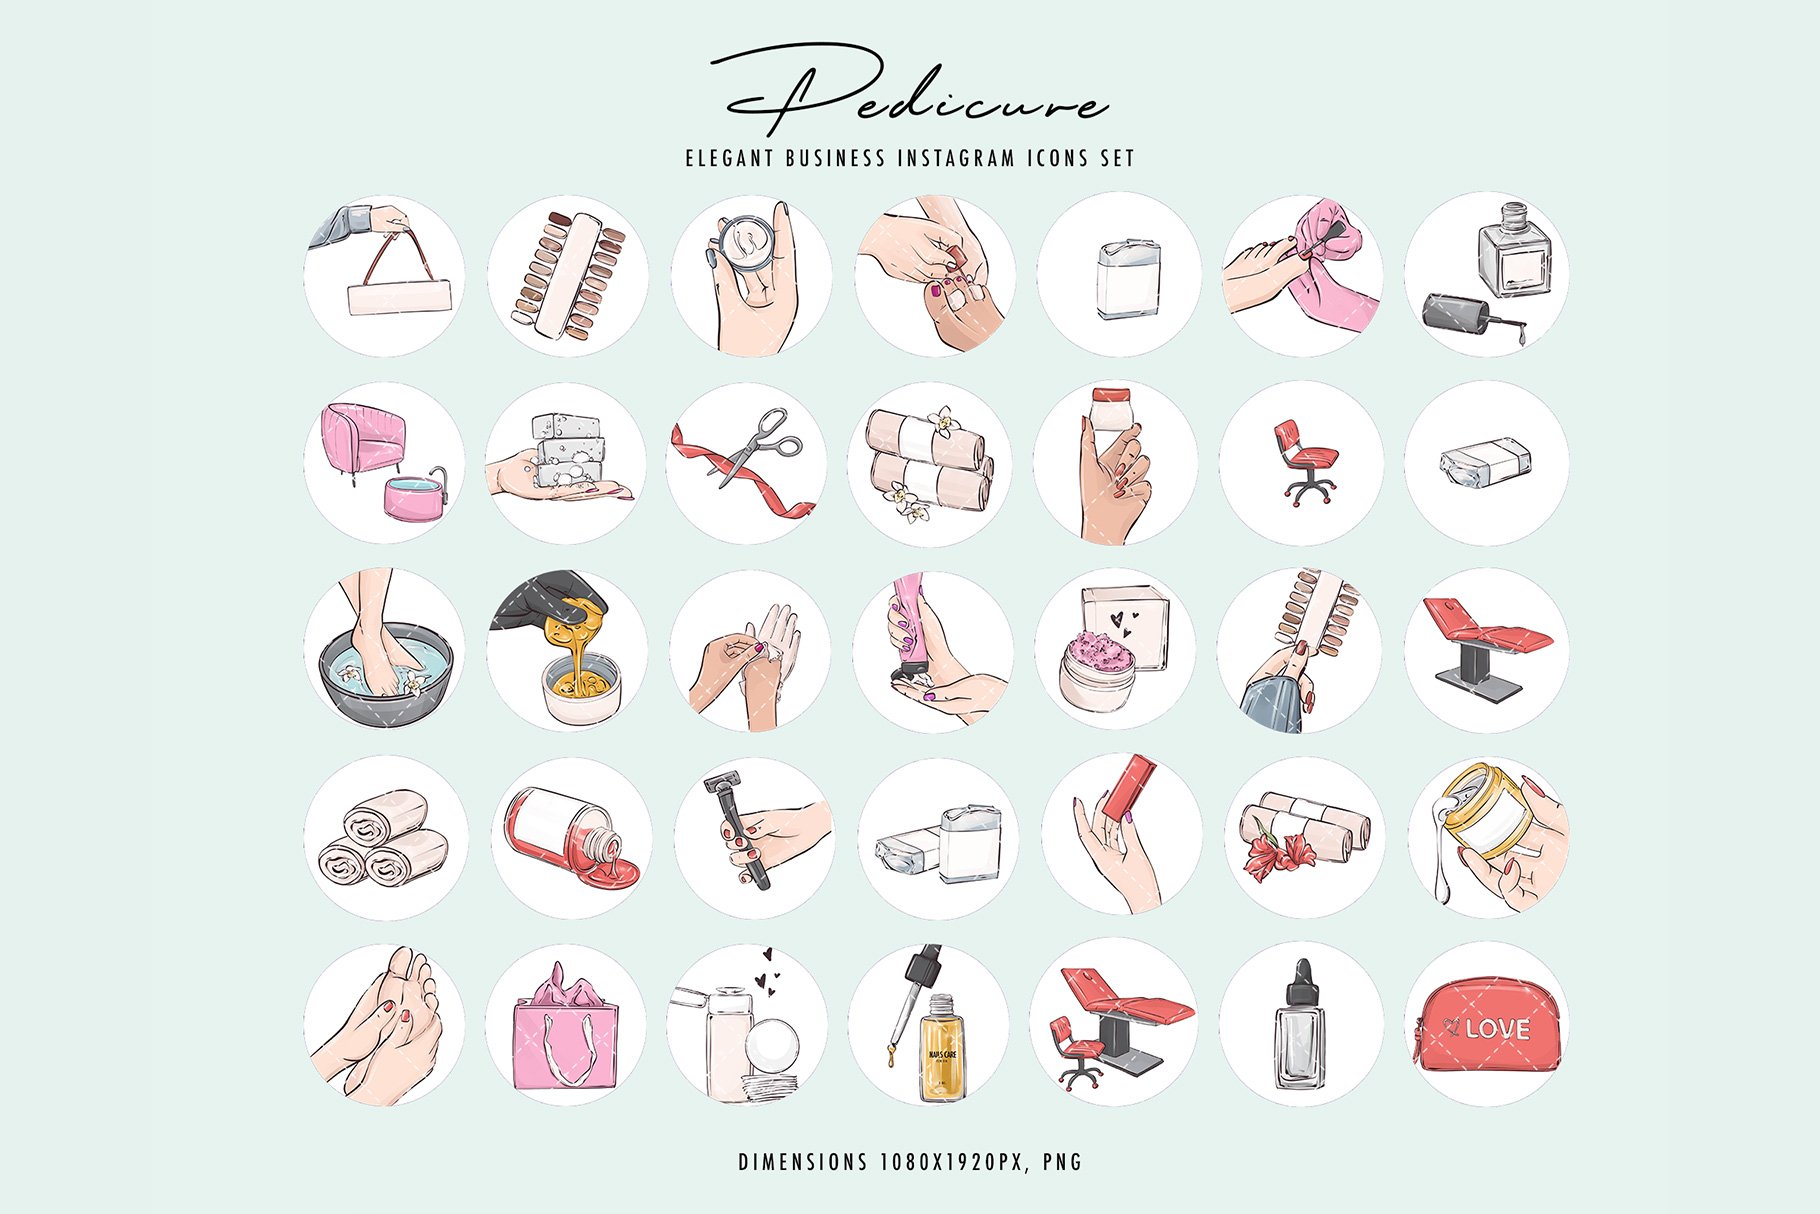 Pedicure nail polish beauty salonpreview image.